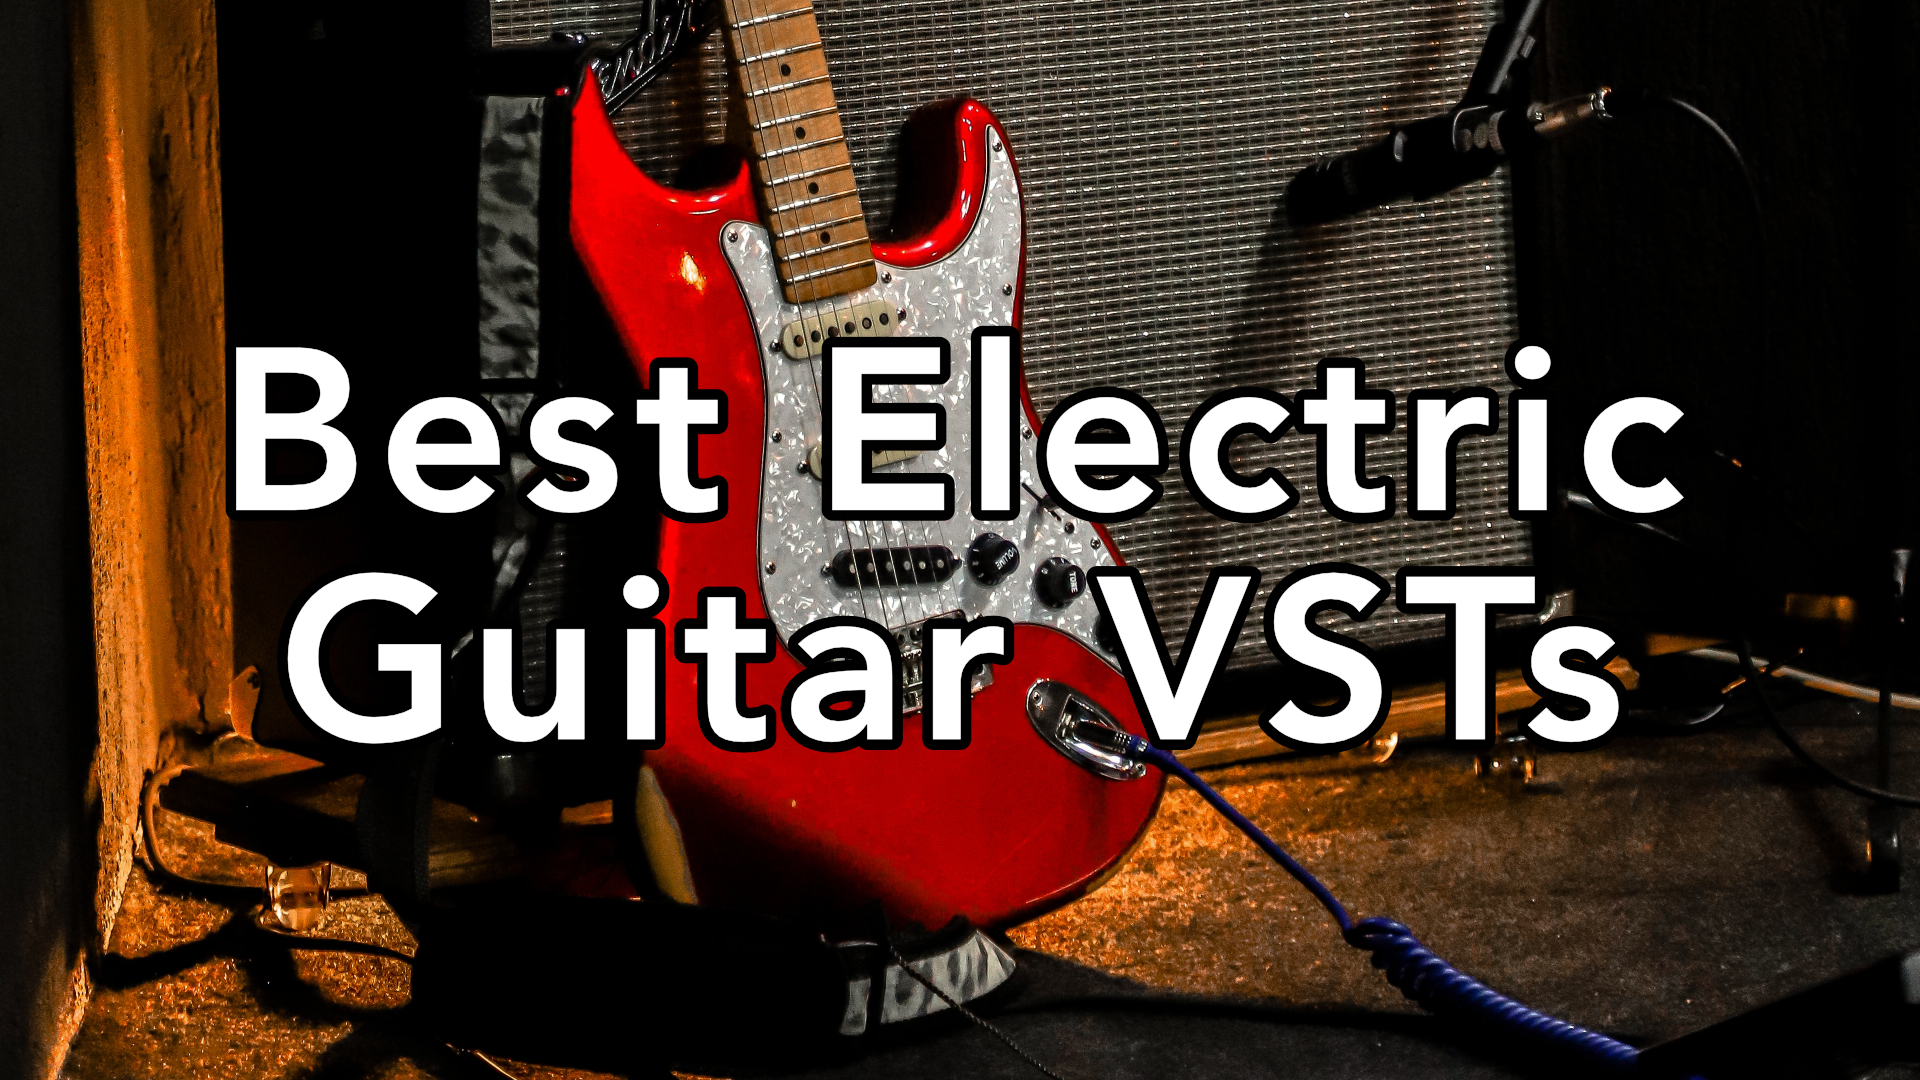 Best Electric Guitar VST Plugins